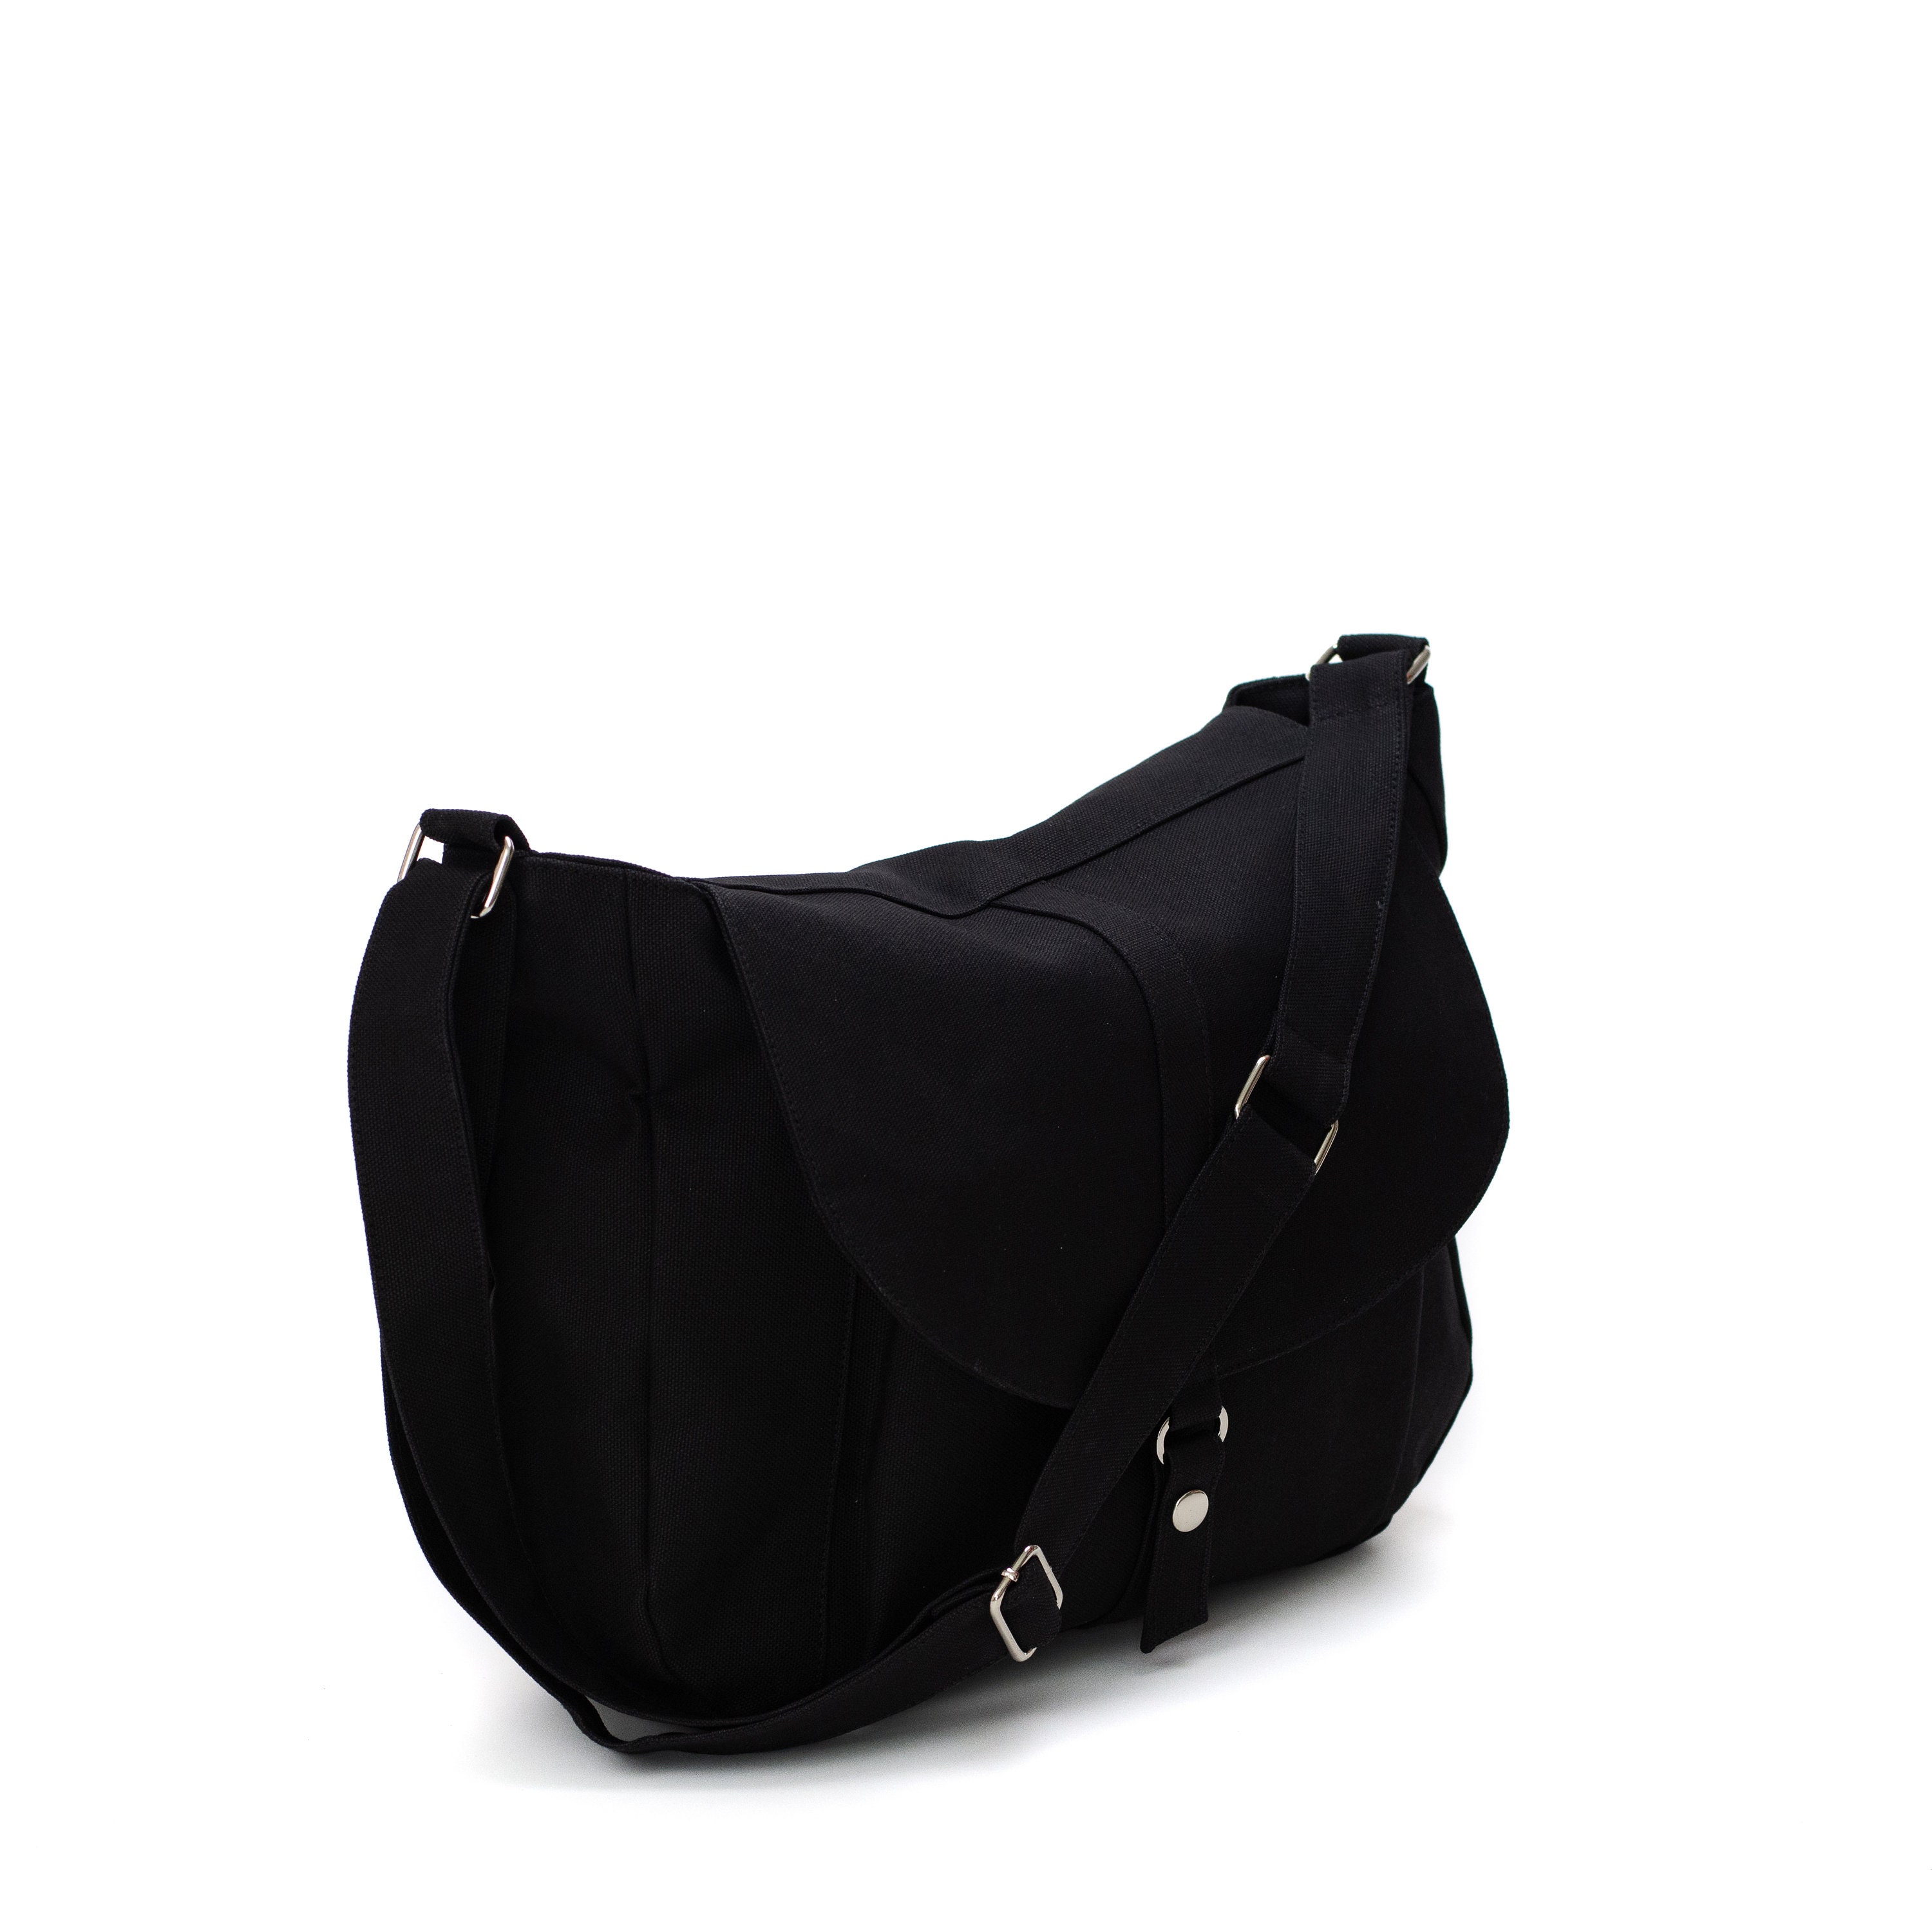 Kavoc Casual Canvas Messenger Bags Women Large Capacity Shoulder Handbag (Black) Yellow 310*280*80(Mm)